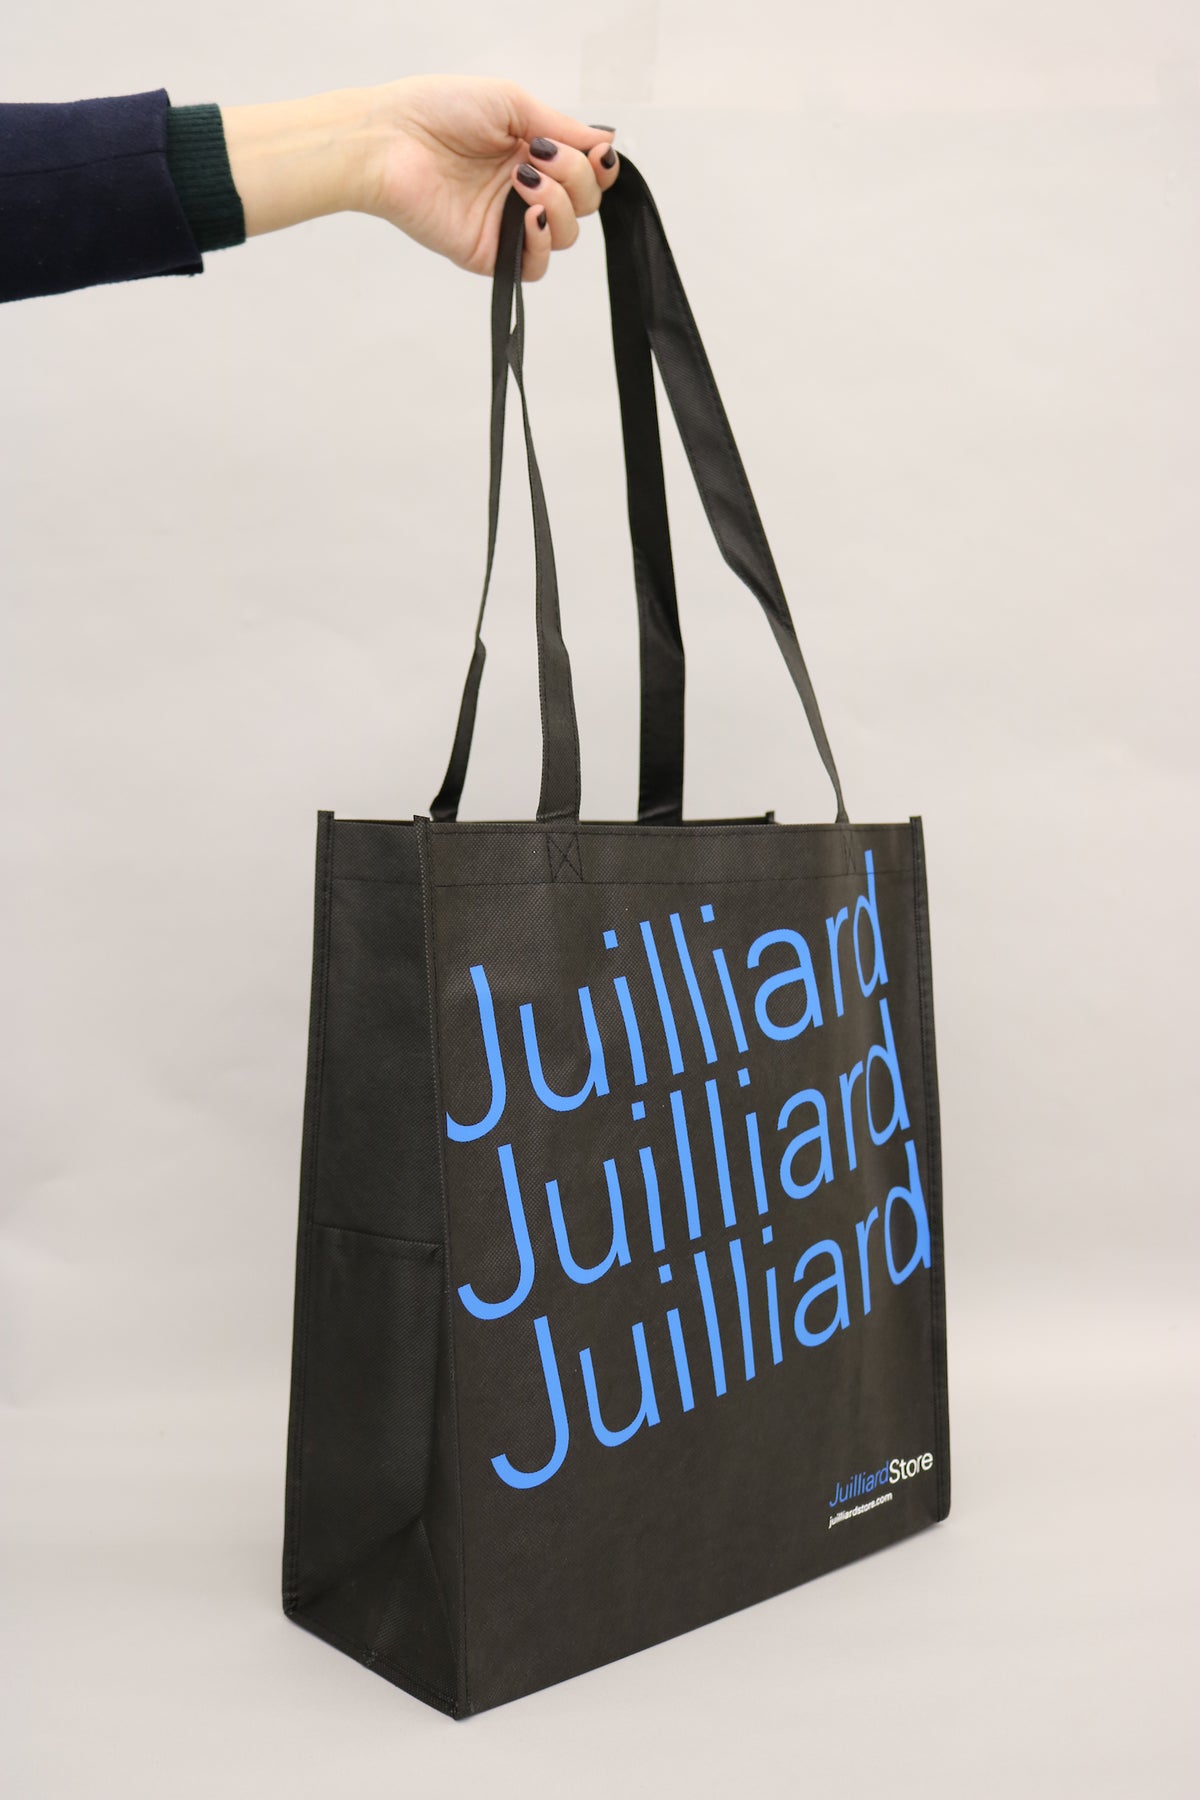 Black reusable tote bag with blue Juilliard logo